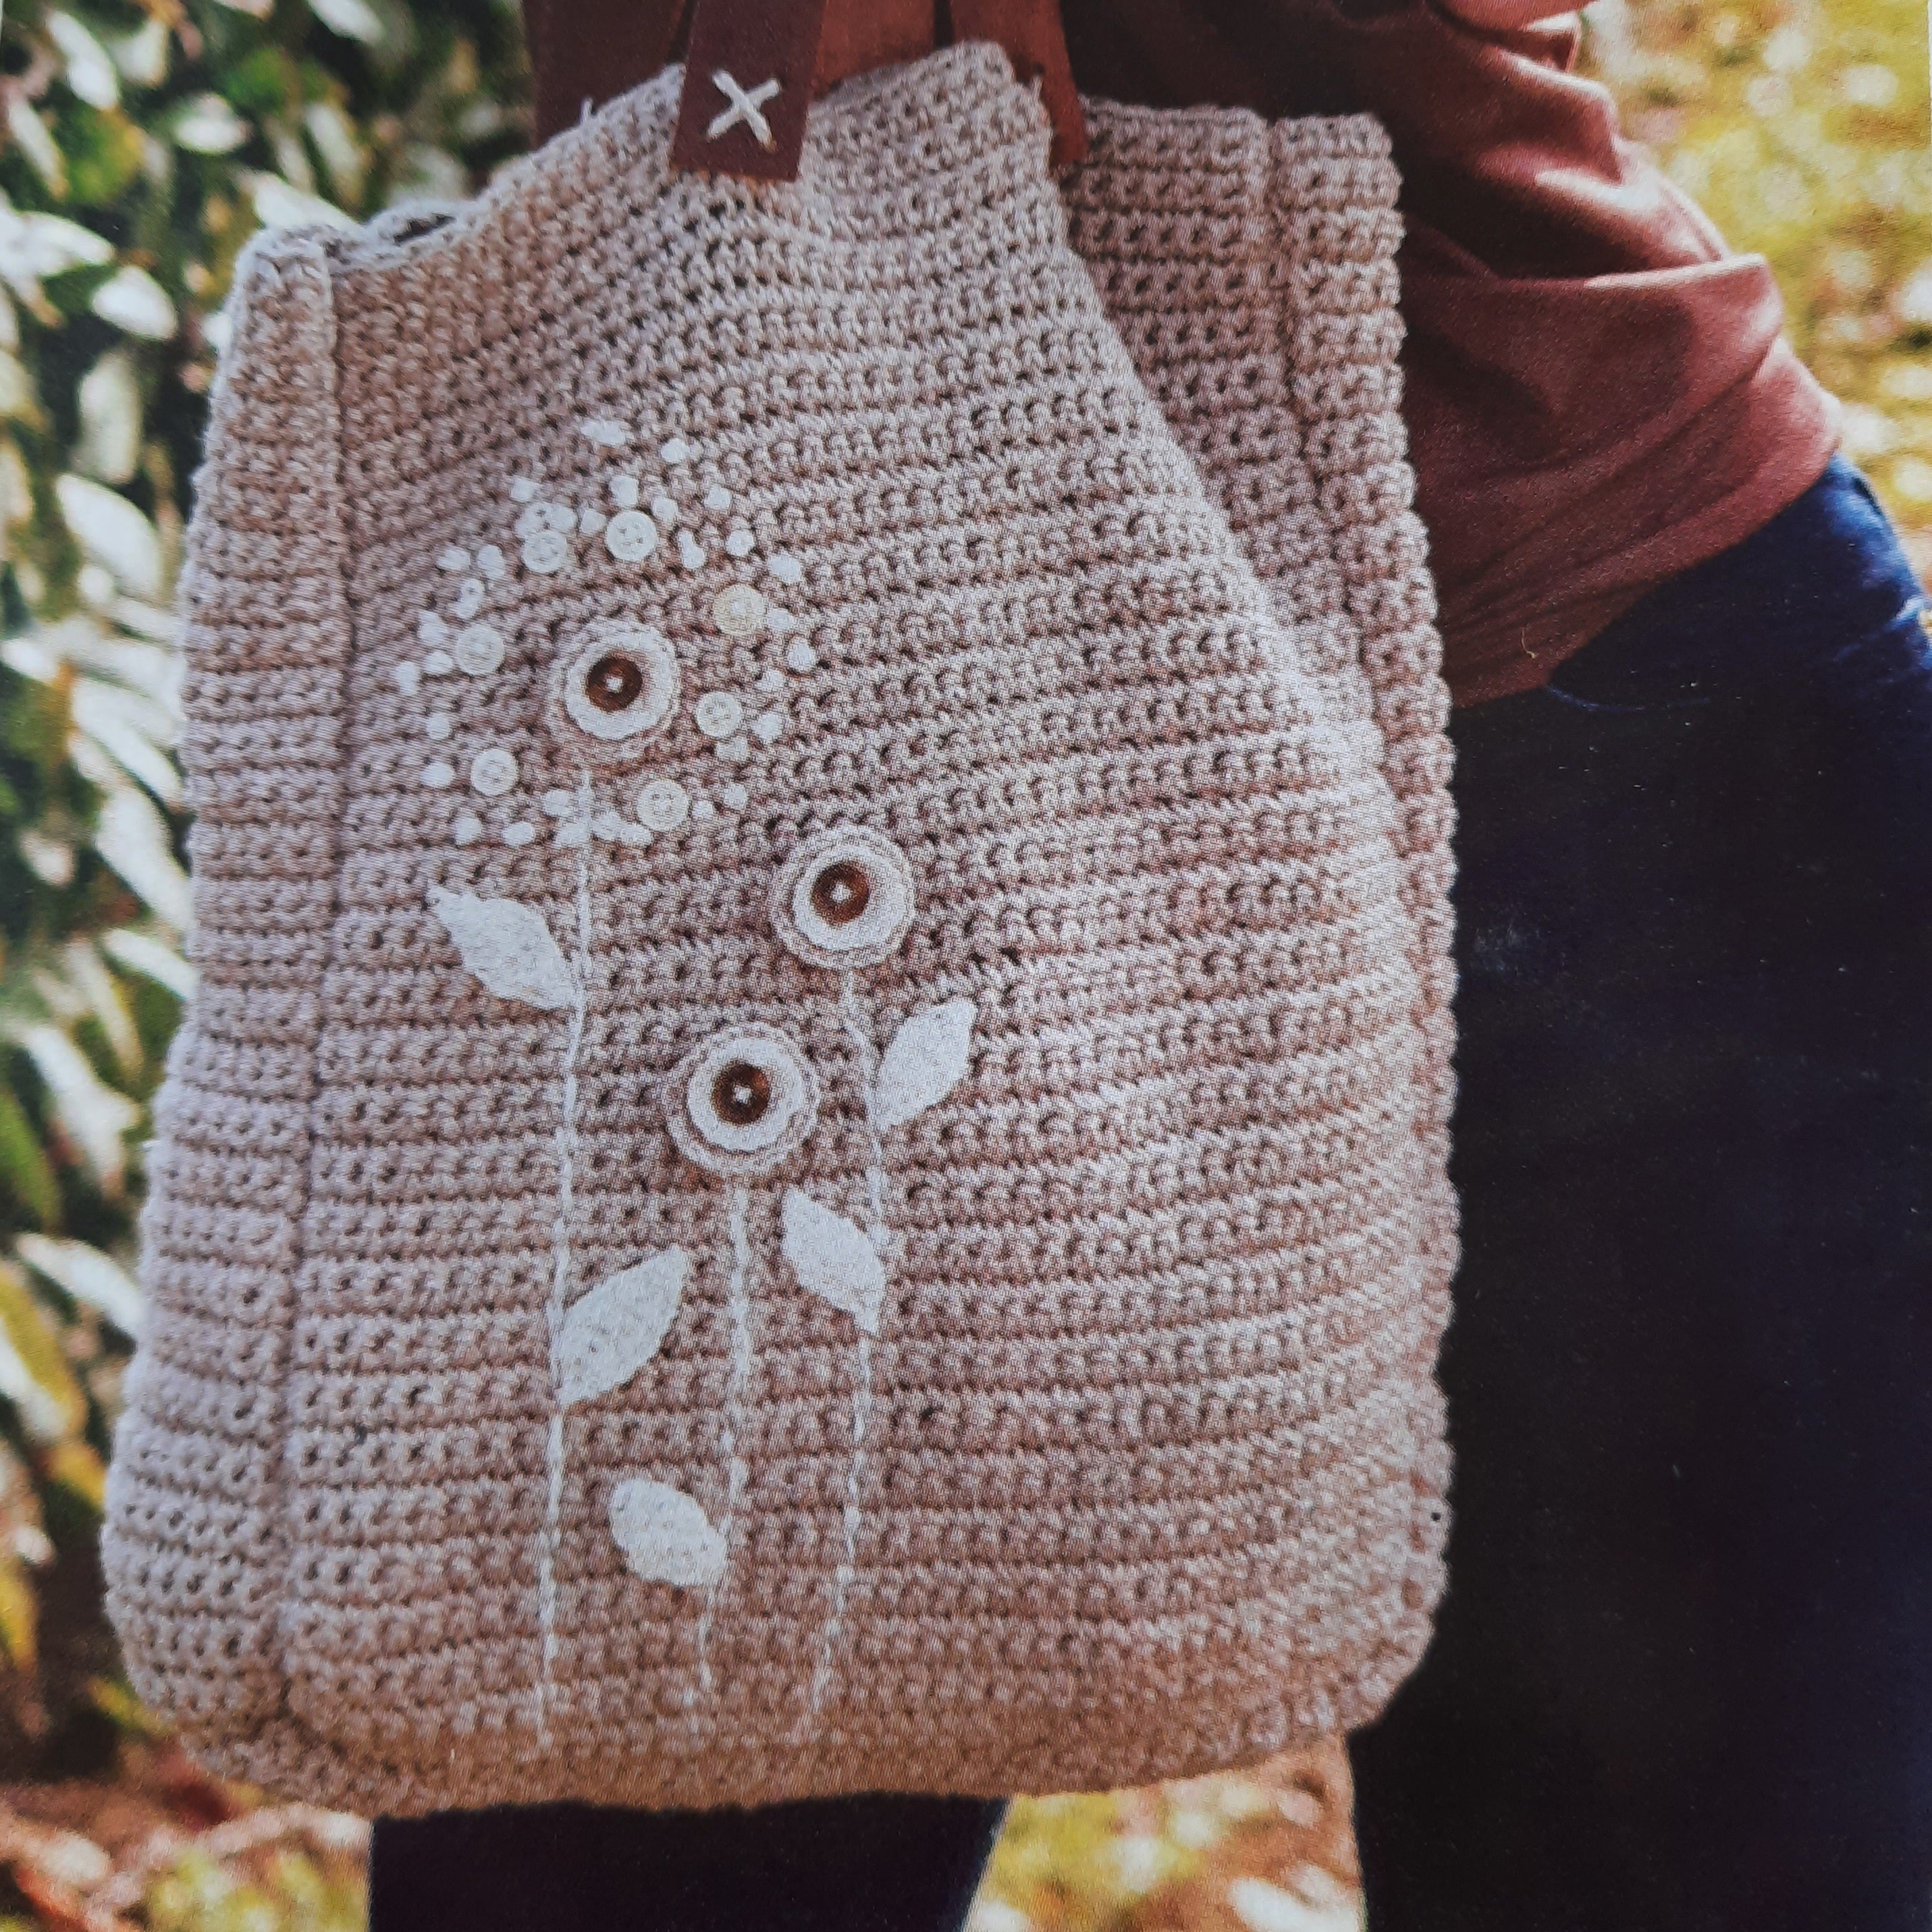 How to Crochet a Bag - Easy Crochet Tote Bag - Brecken Bag Tutorial -  YouTube